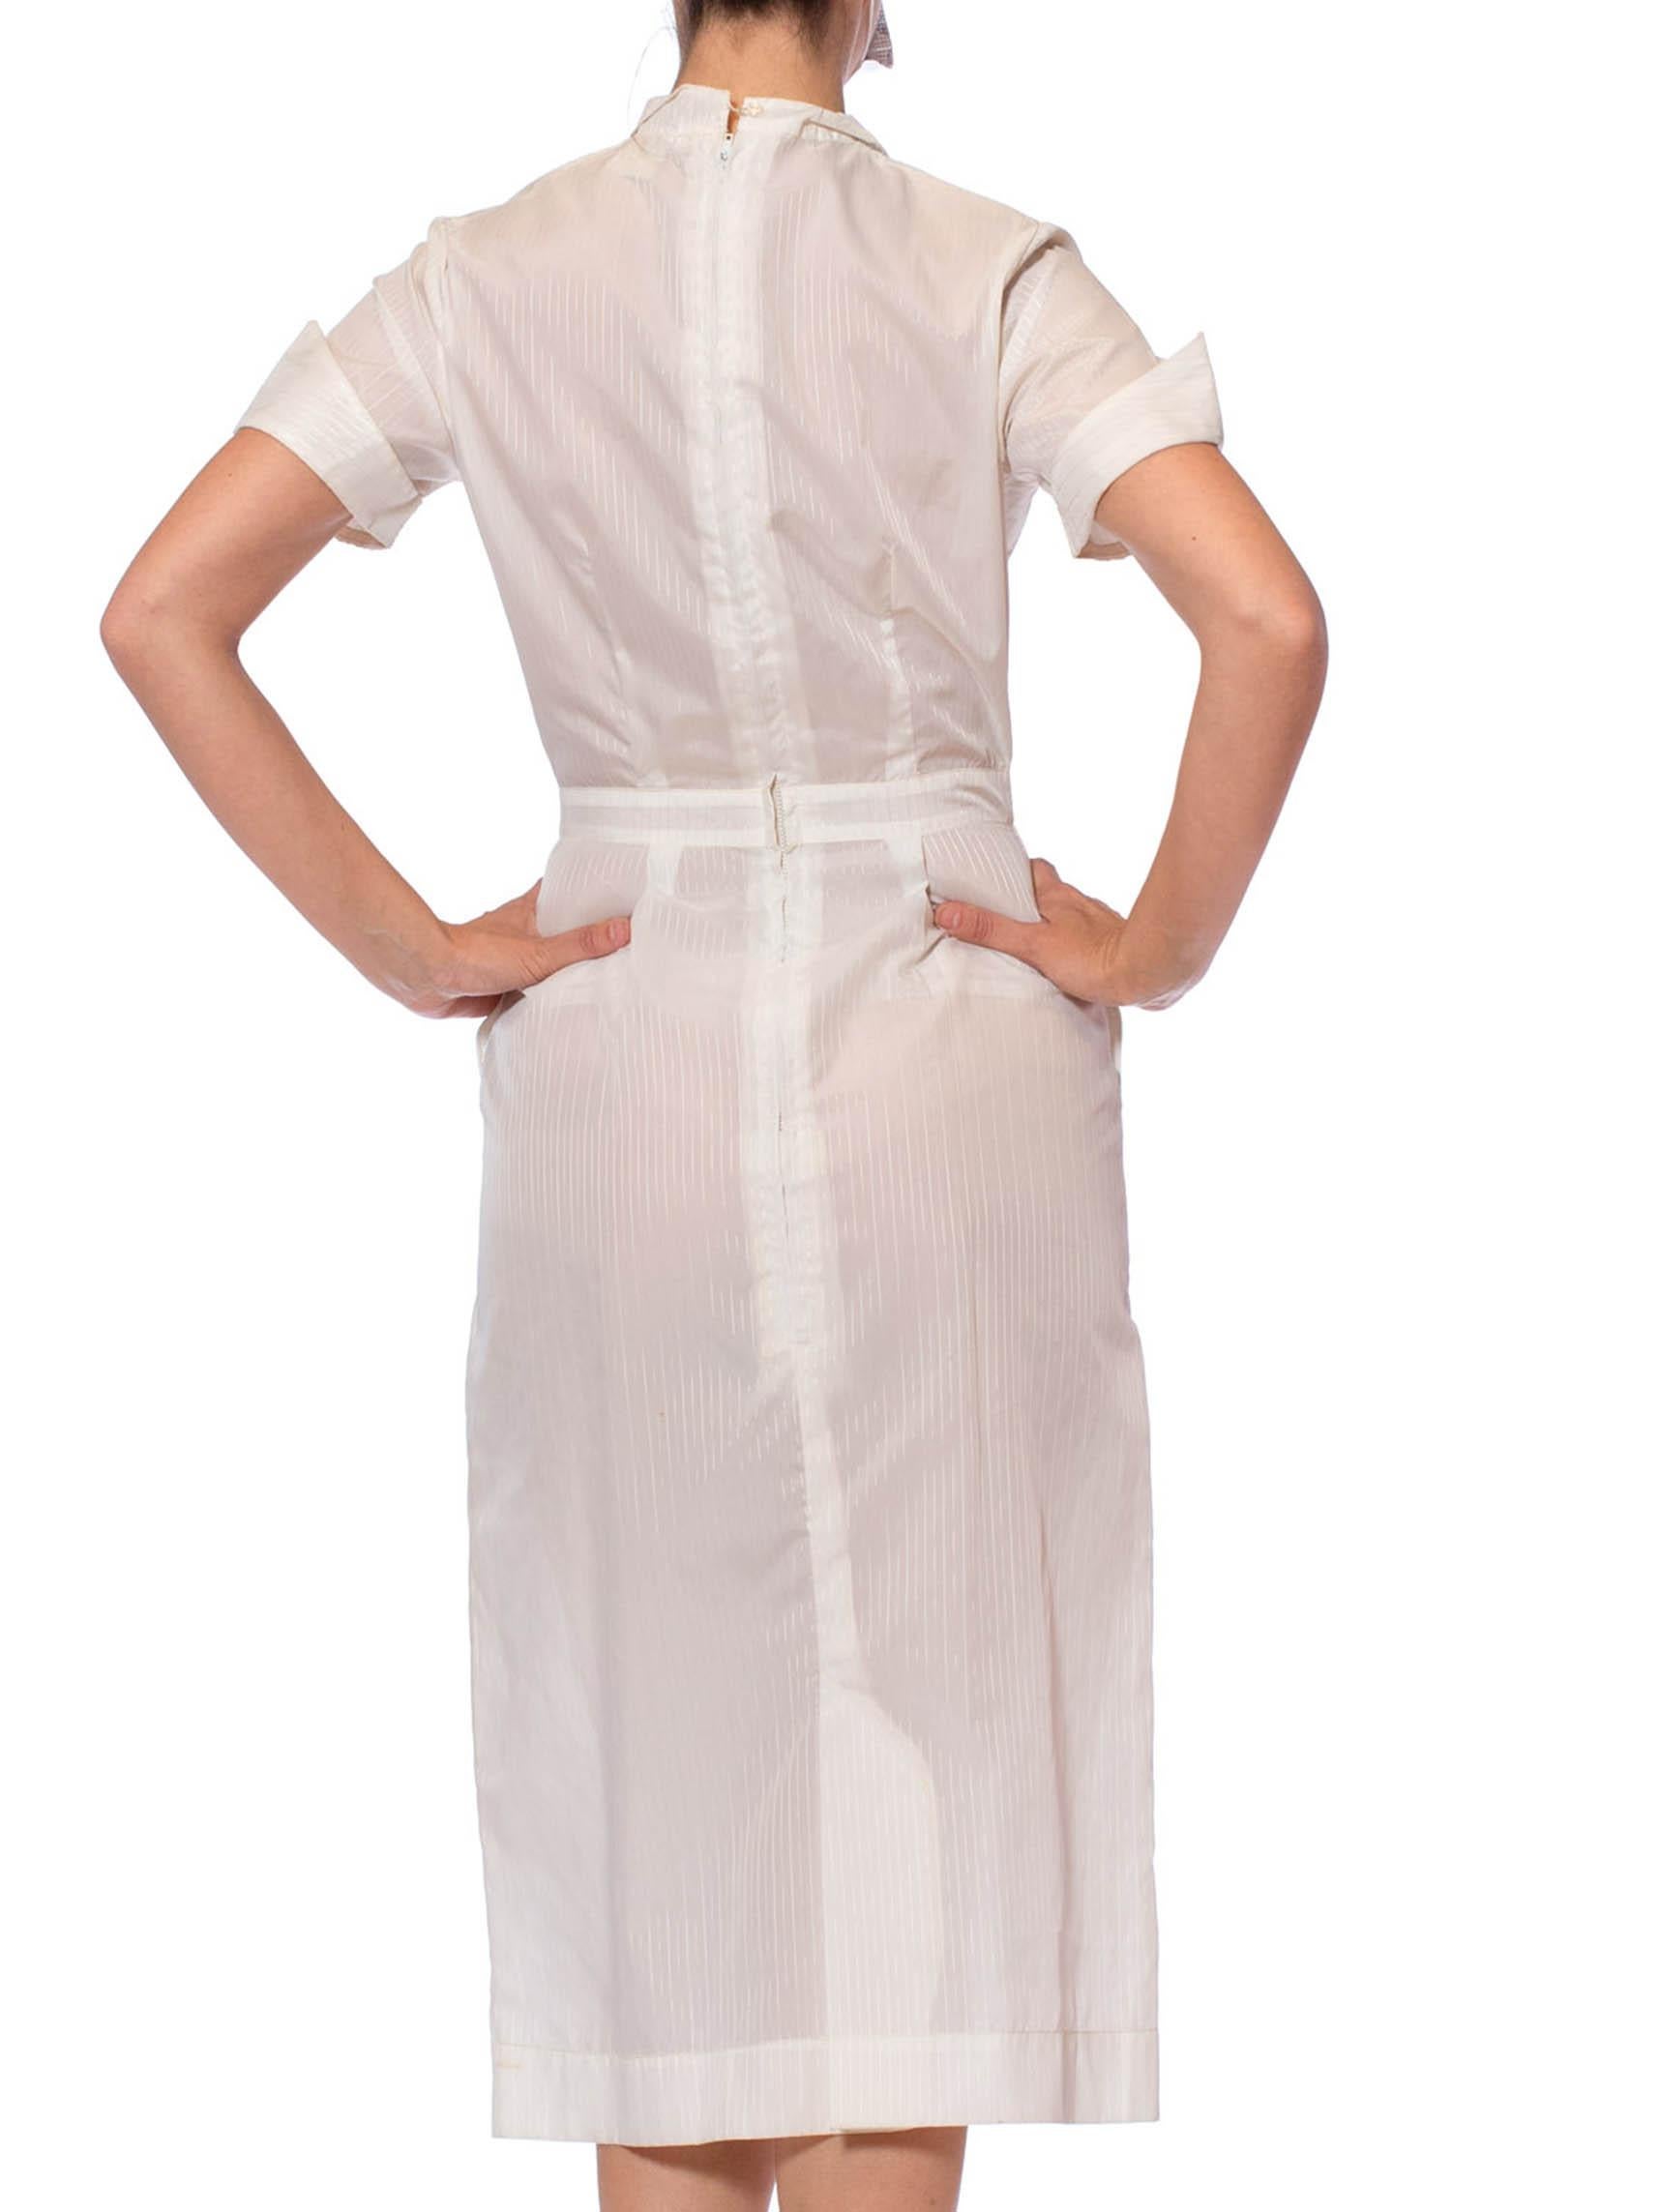 1950S White Nylon Pin-Up Nurse Uniform Dress For Sale 1